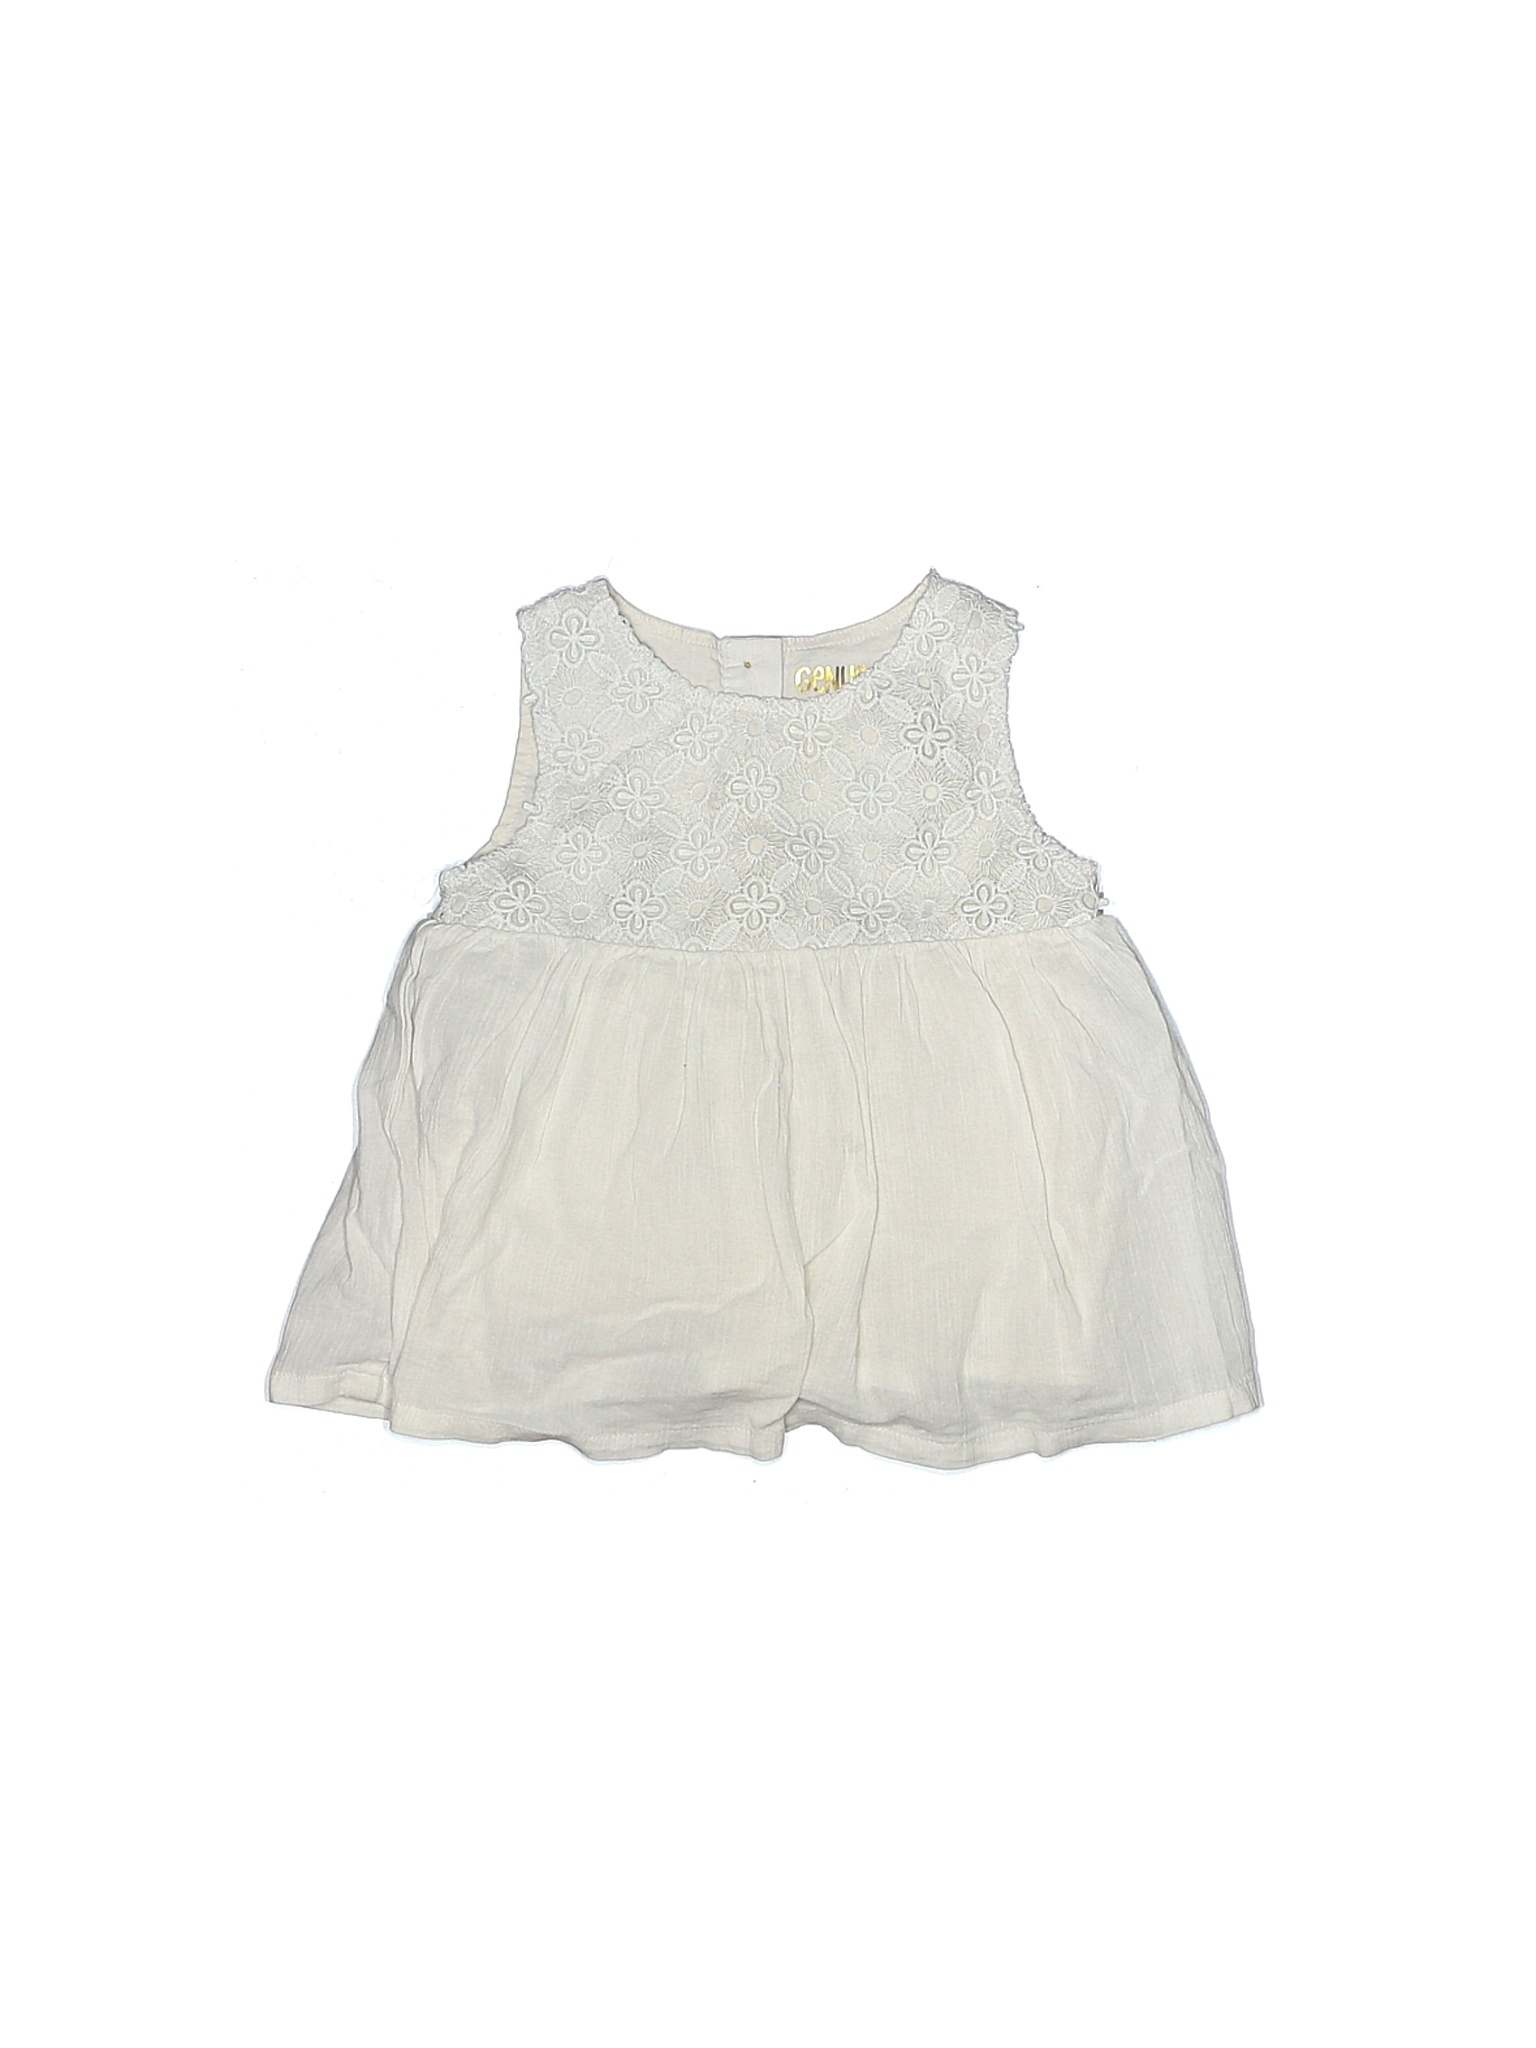 Genuine Kids from Oshkosh Solid White Dress Size 4T - 50% off | thredUP